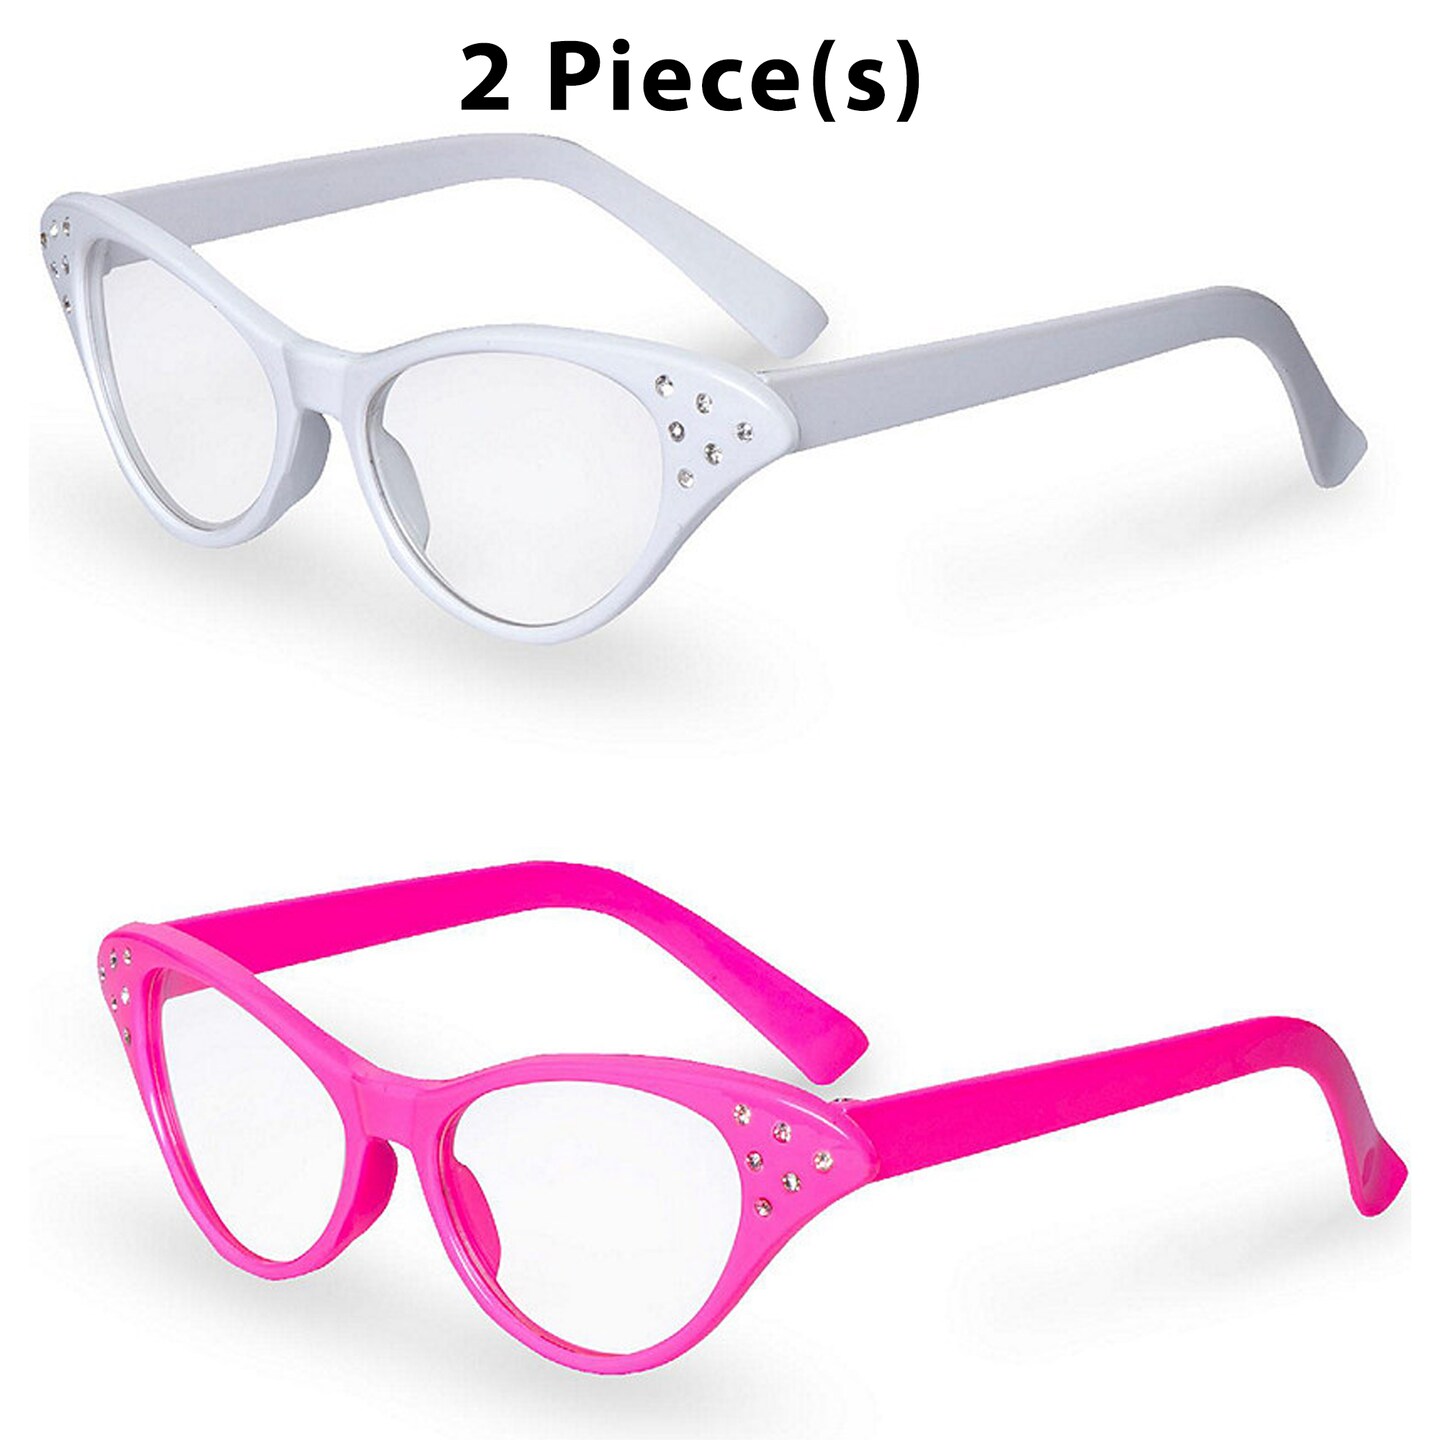 Big Mo&#x27;s Toys Pink and White Cat Eye Retro Costume Dress Up Rhinestone Glasses